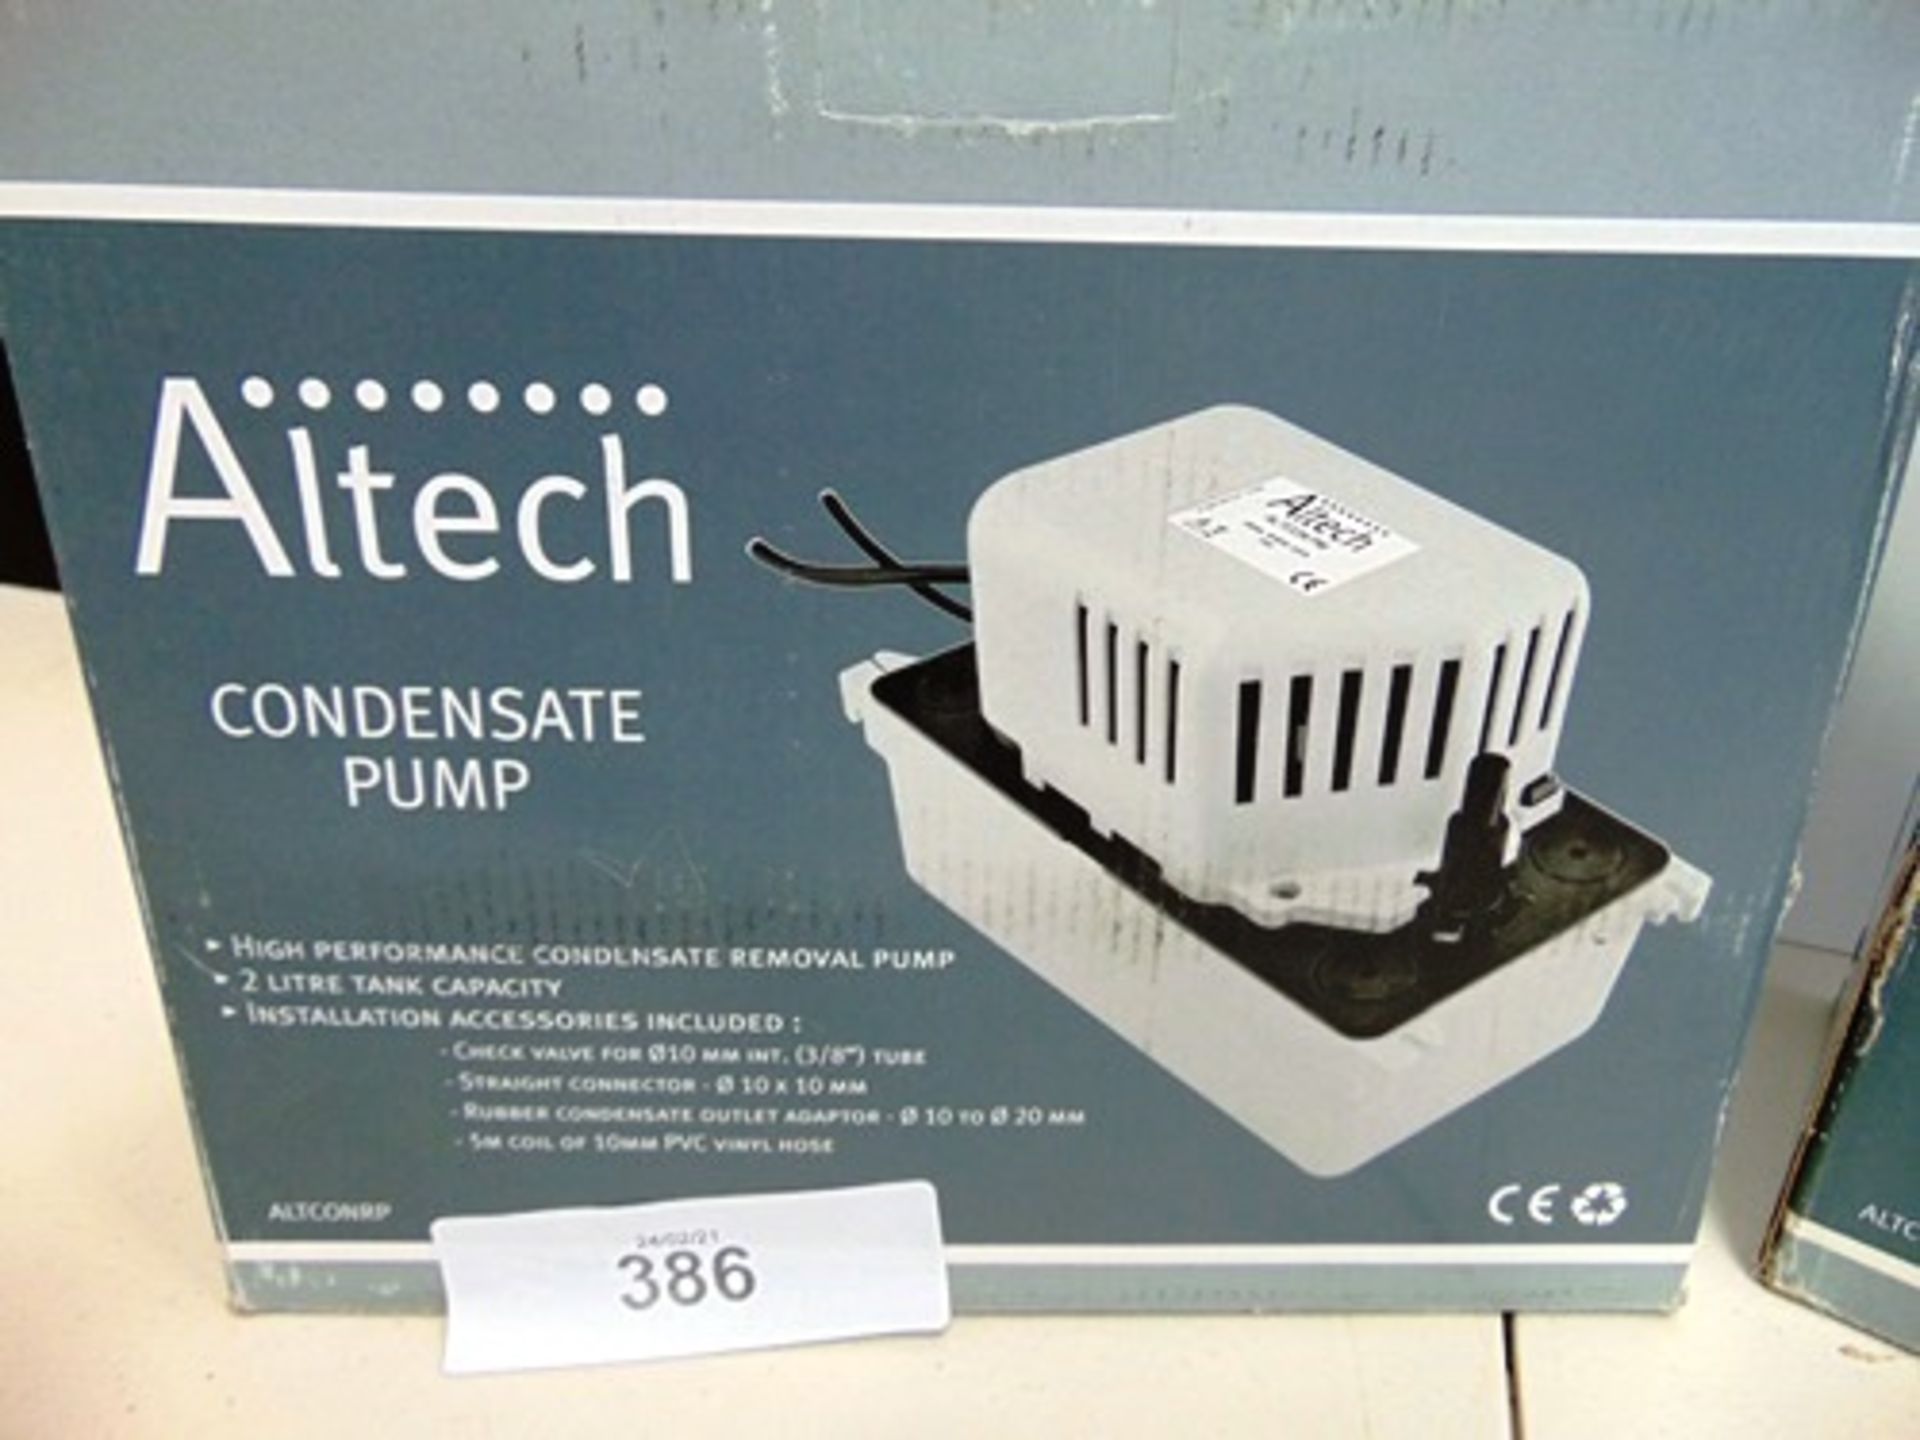 2 x Altech condensate pump, model Altconrp - New in box (GS25) - Image 2 of 2